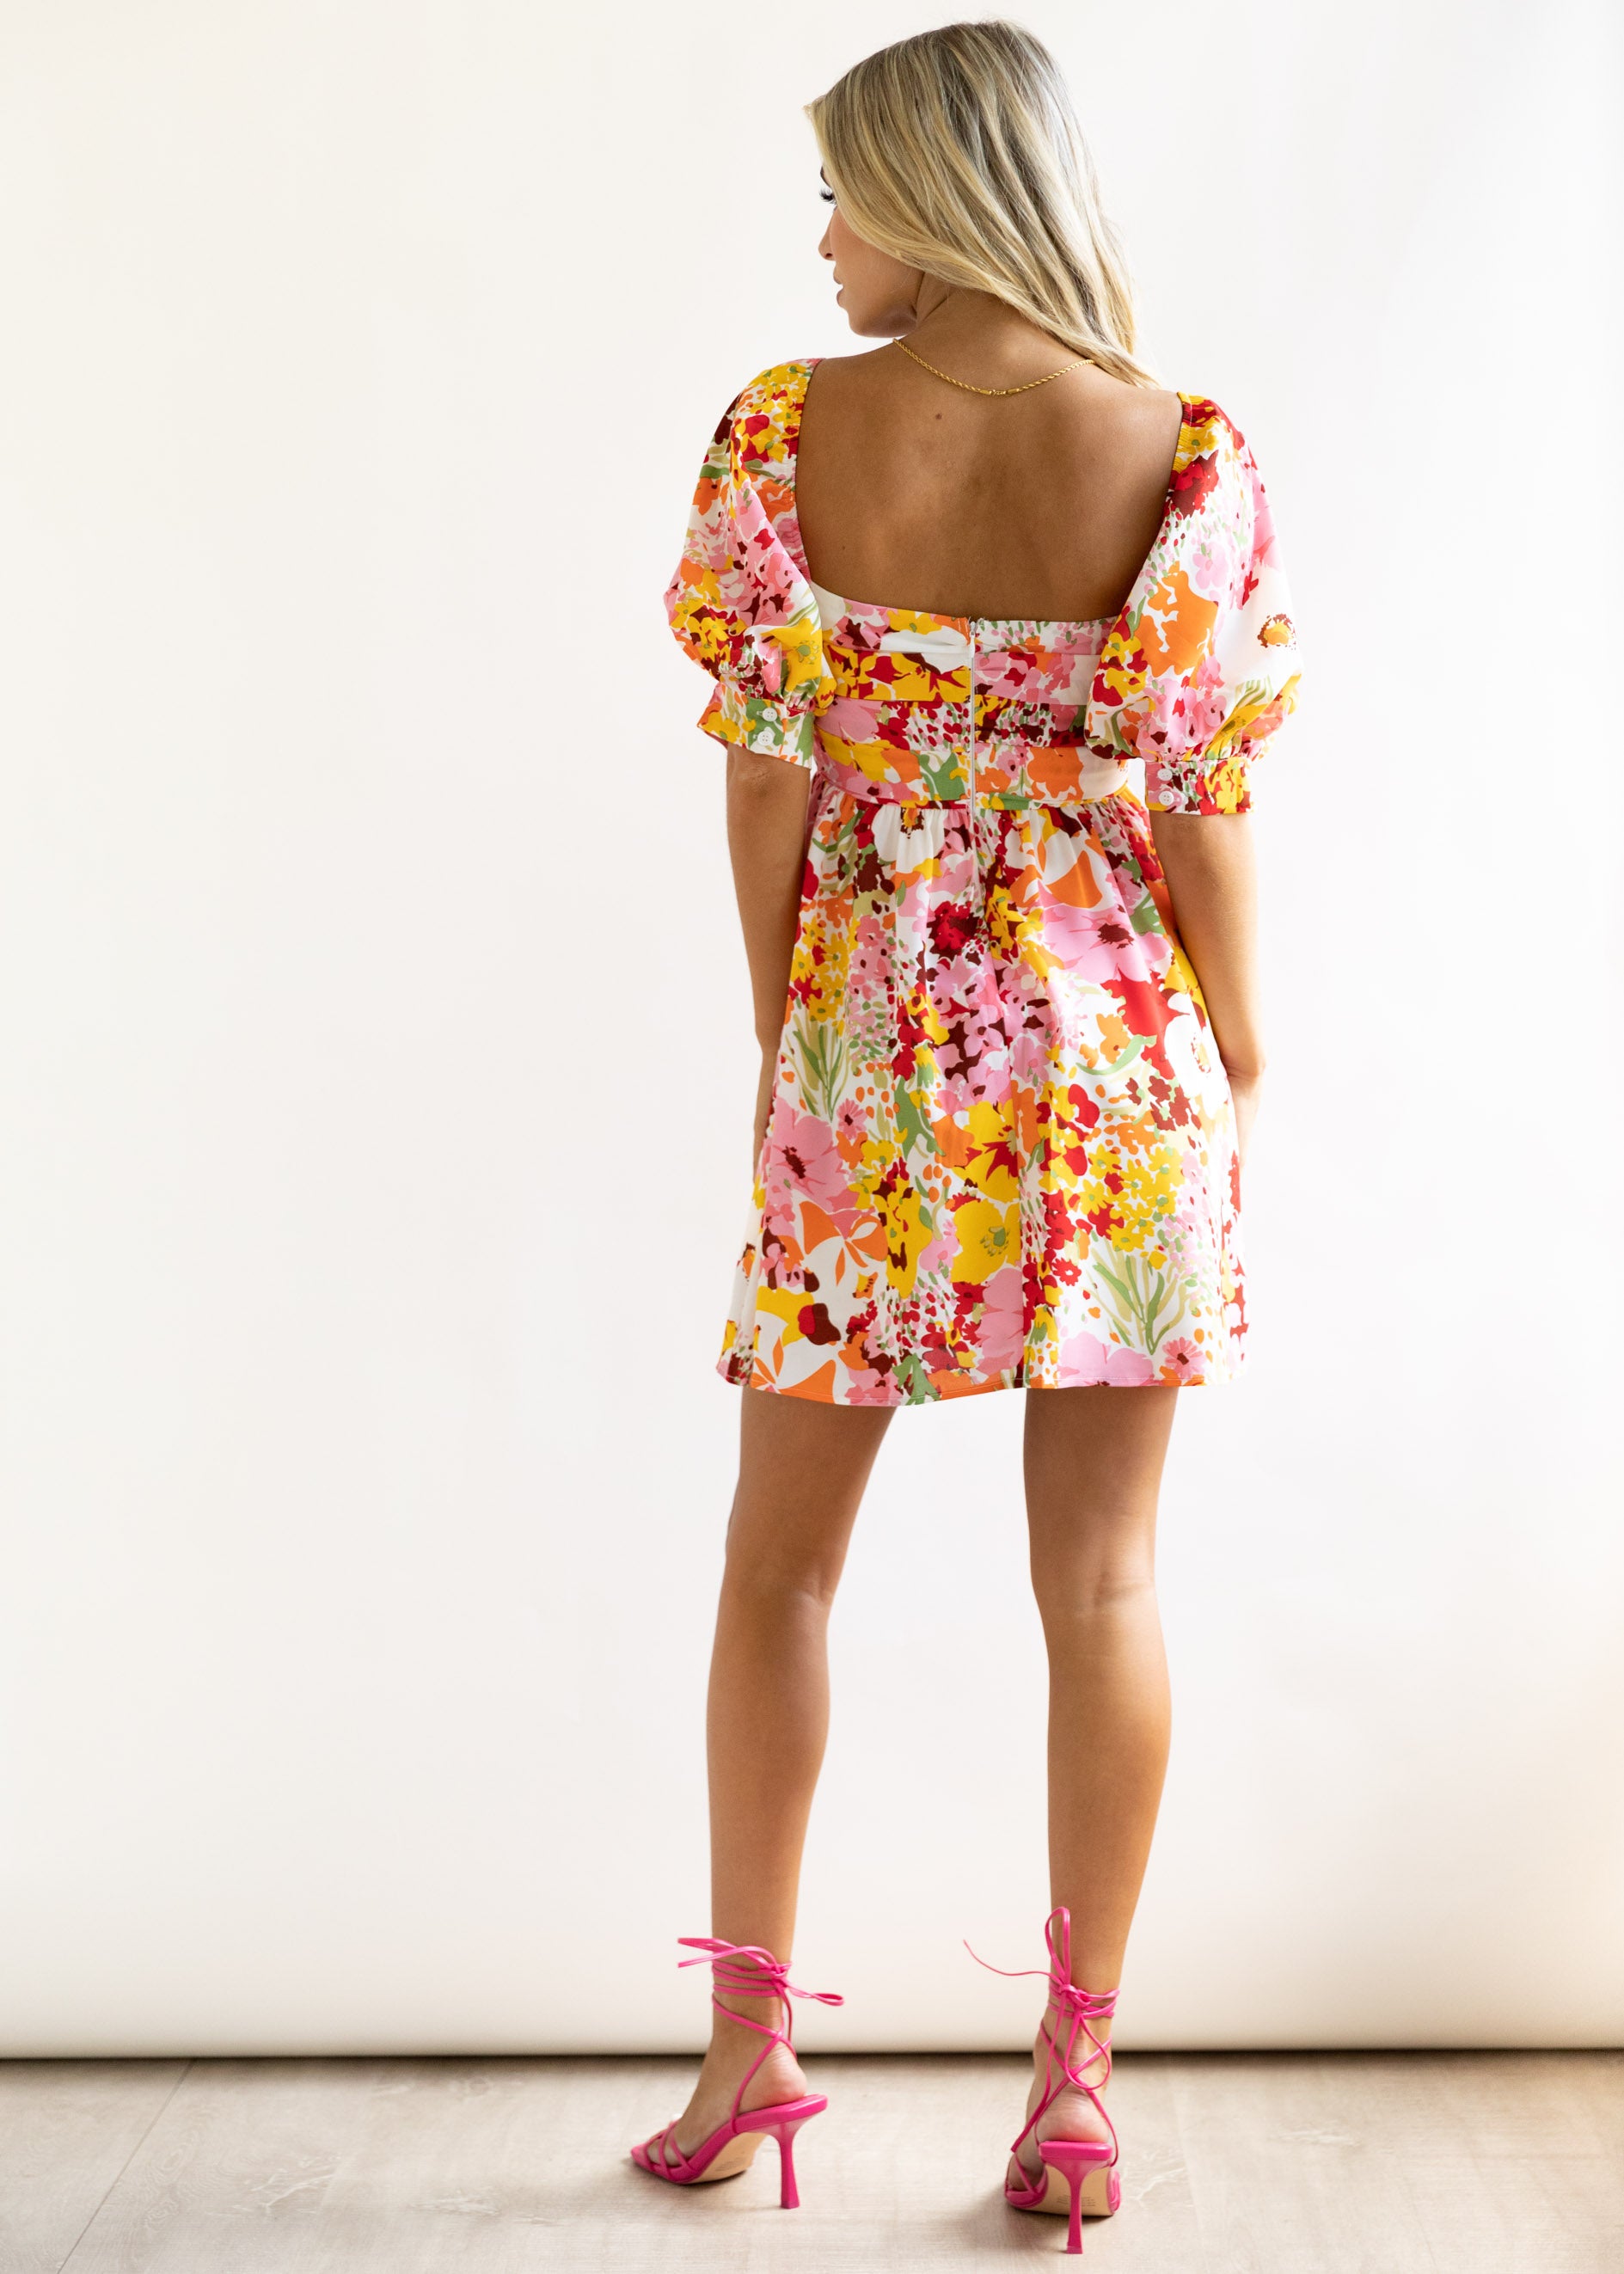 Ivannia Dress - Multi Floral